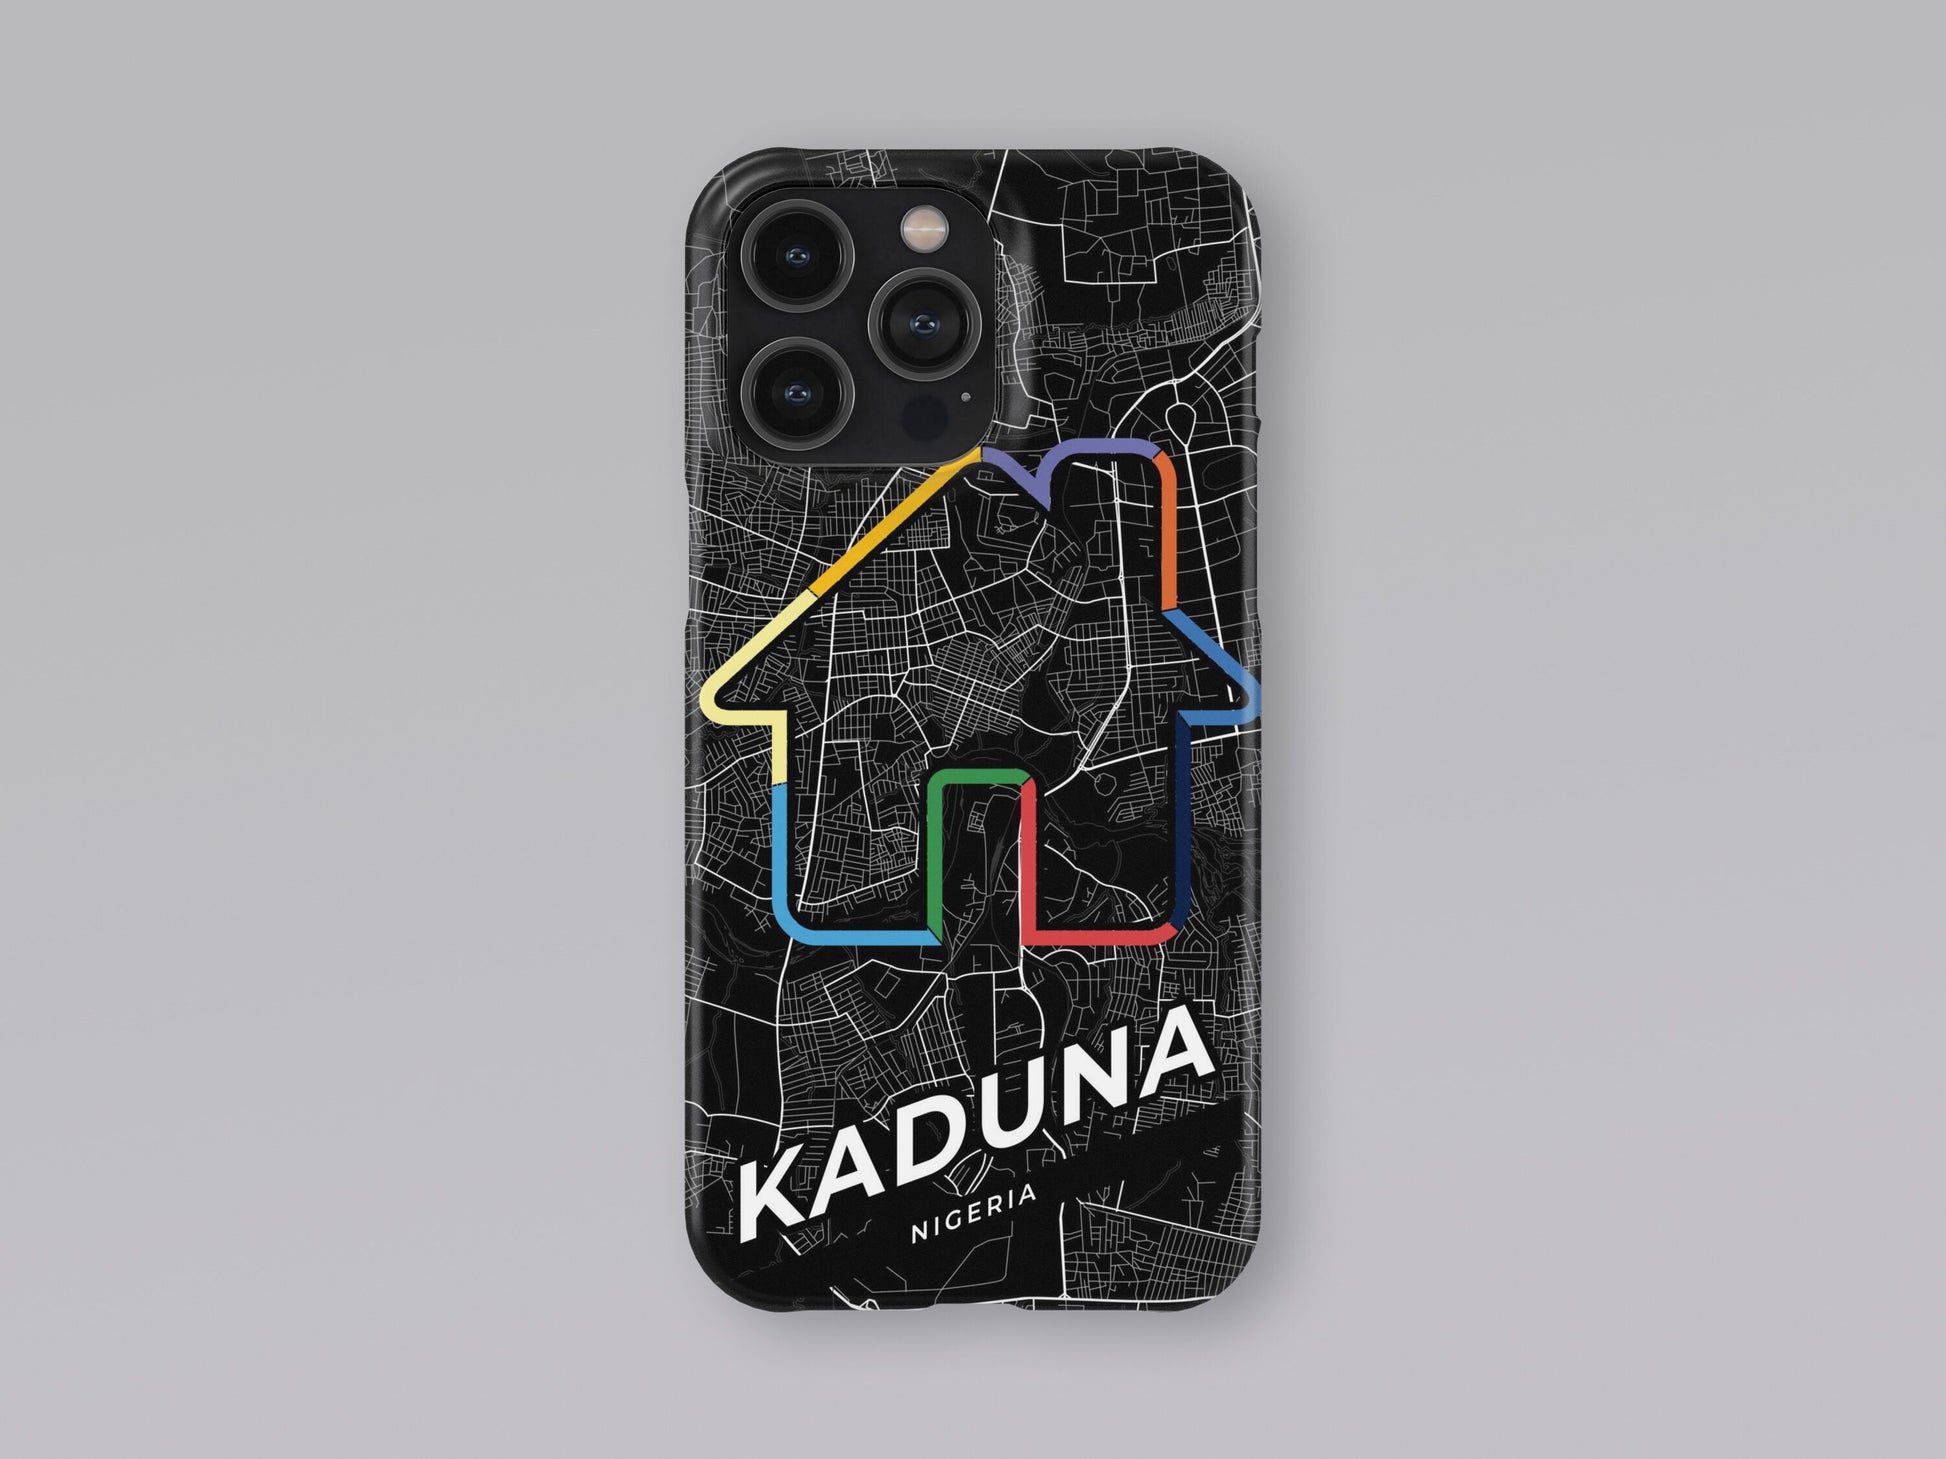 Kaduna Nigeria slim phone case with colorful icon. Birthday, wedding or housewarming gift. Couple match cases. 3